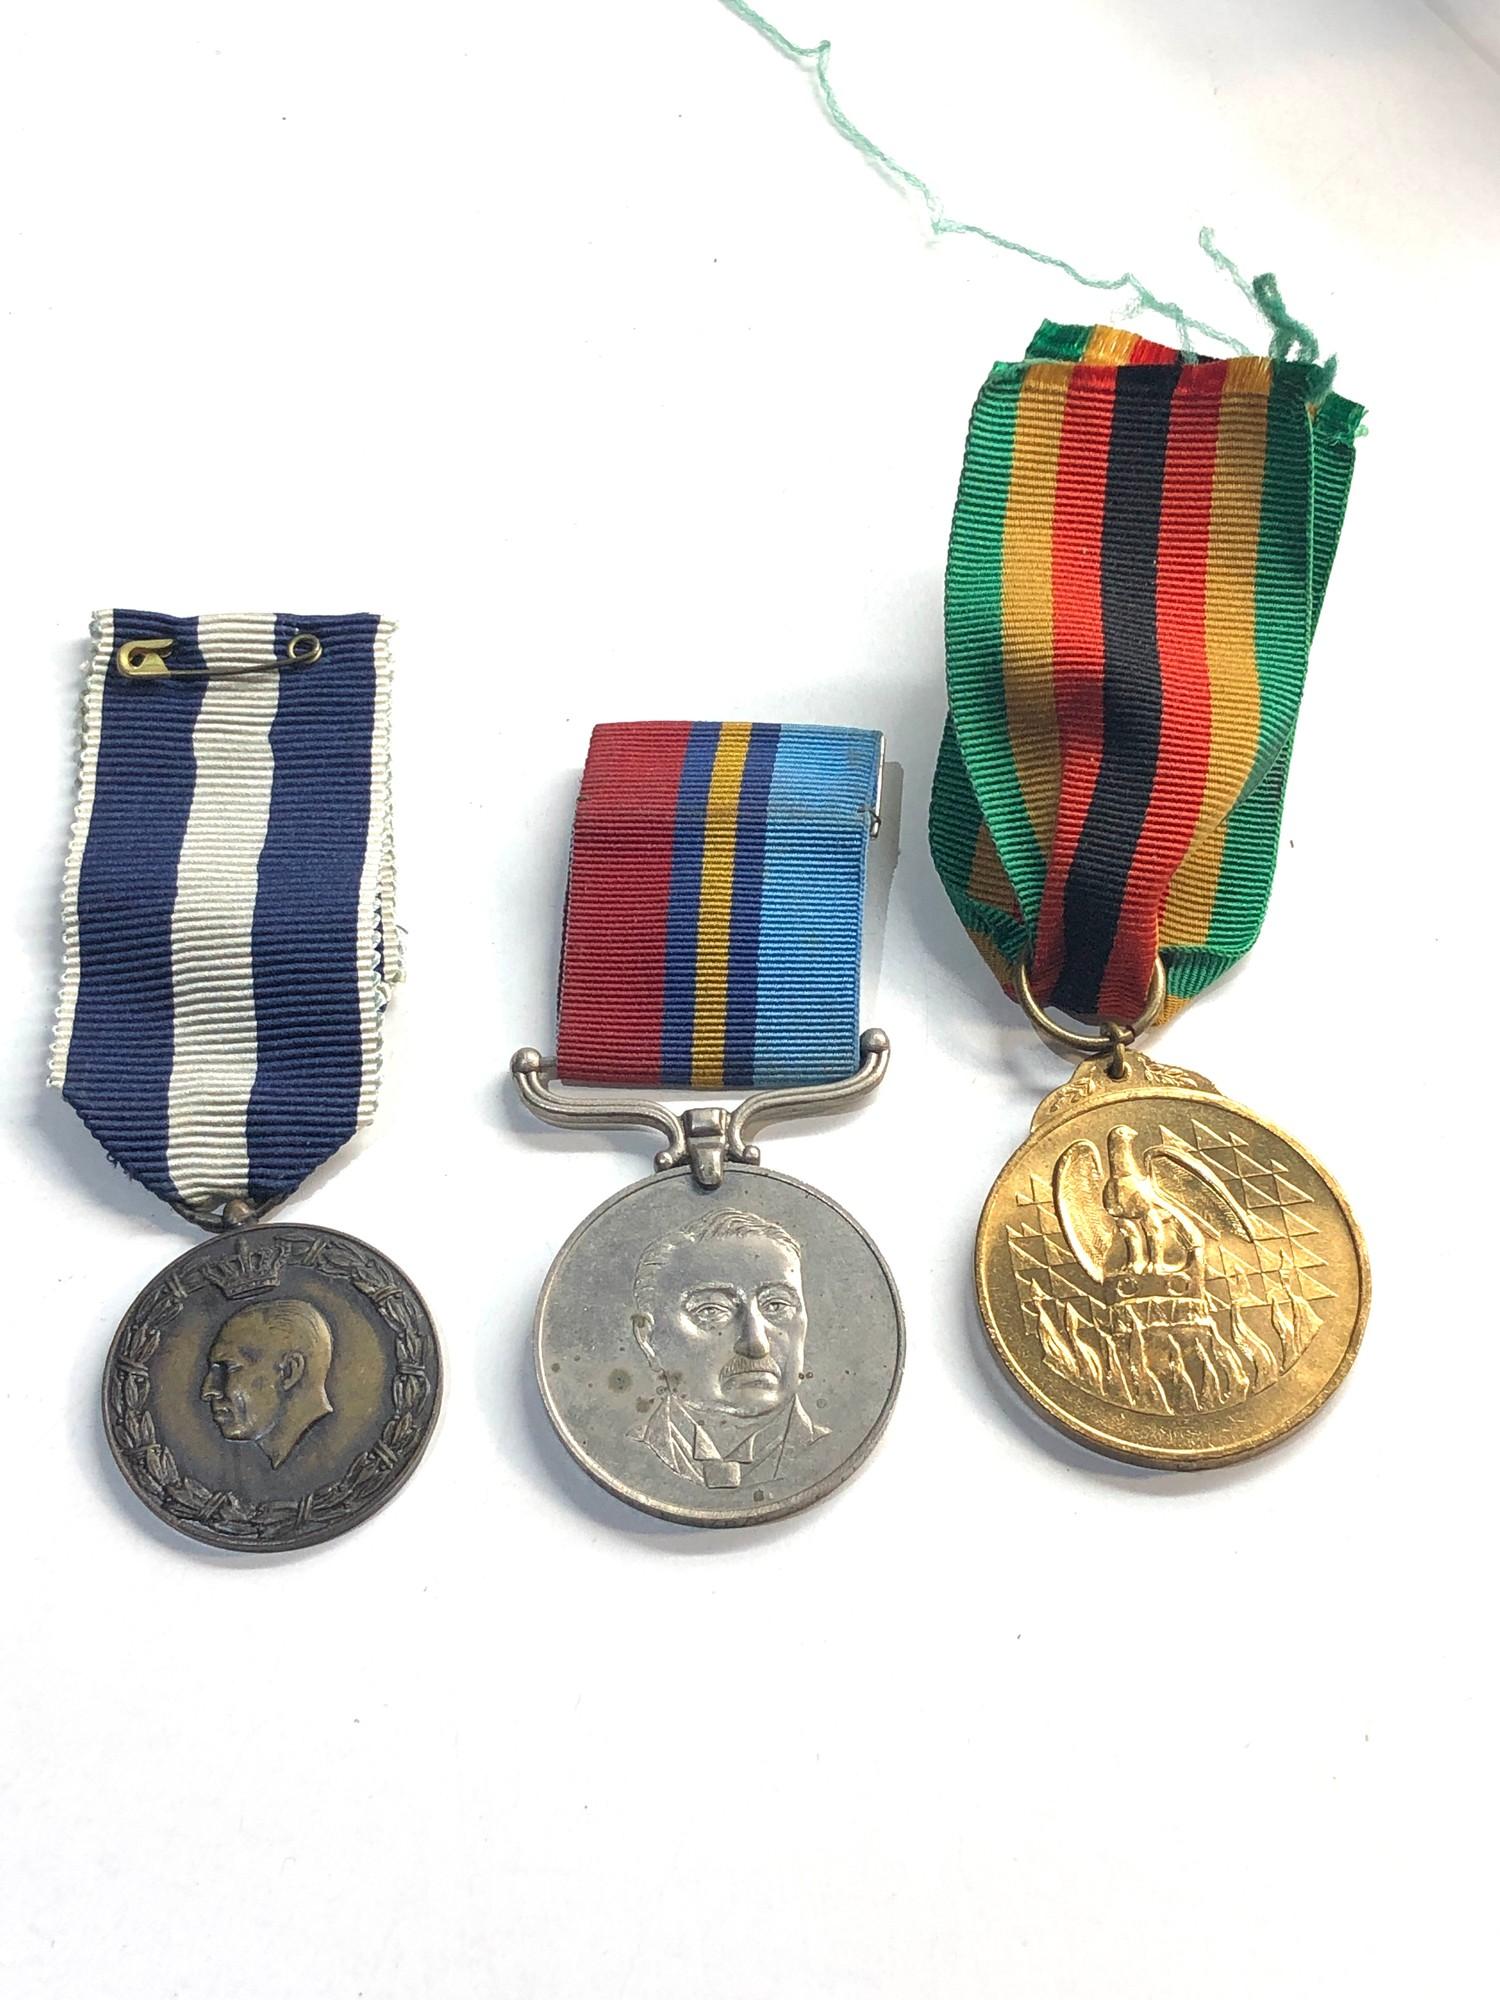 3 vintage medals inc ww2 greek ,zimbabwe rhodesia, the zimbabwe medal rim reads:25535 E R PO S G